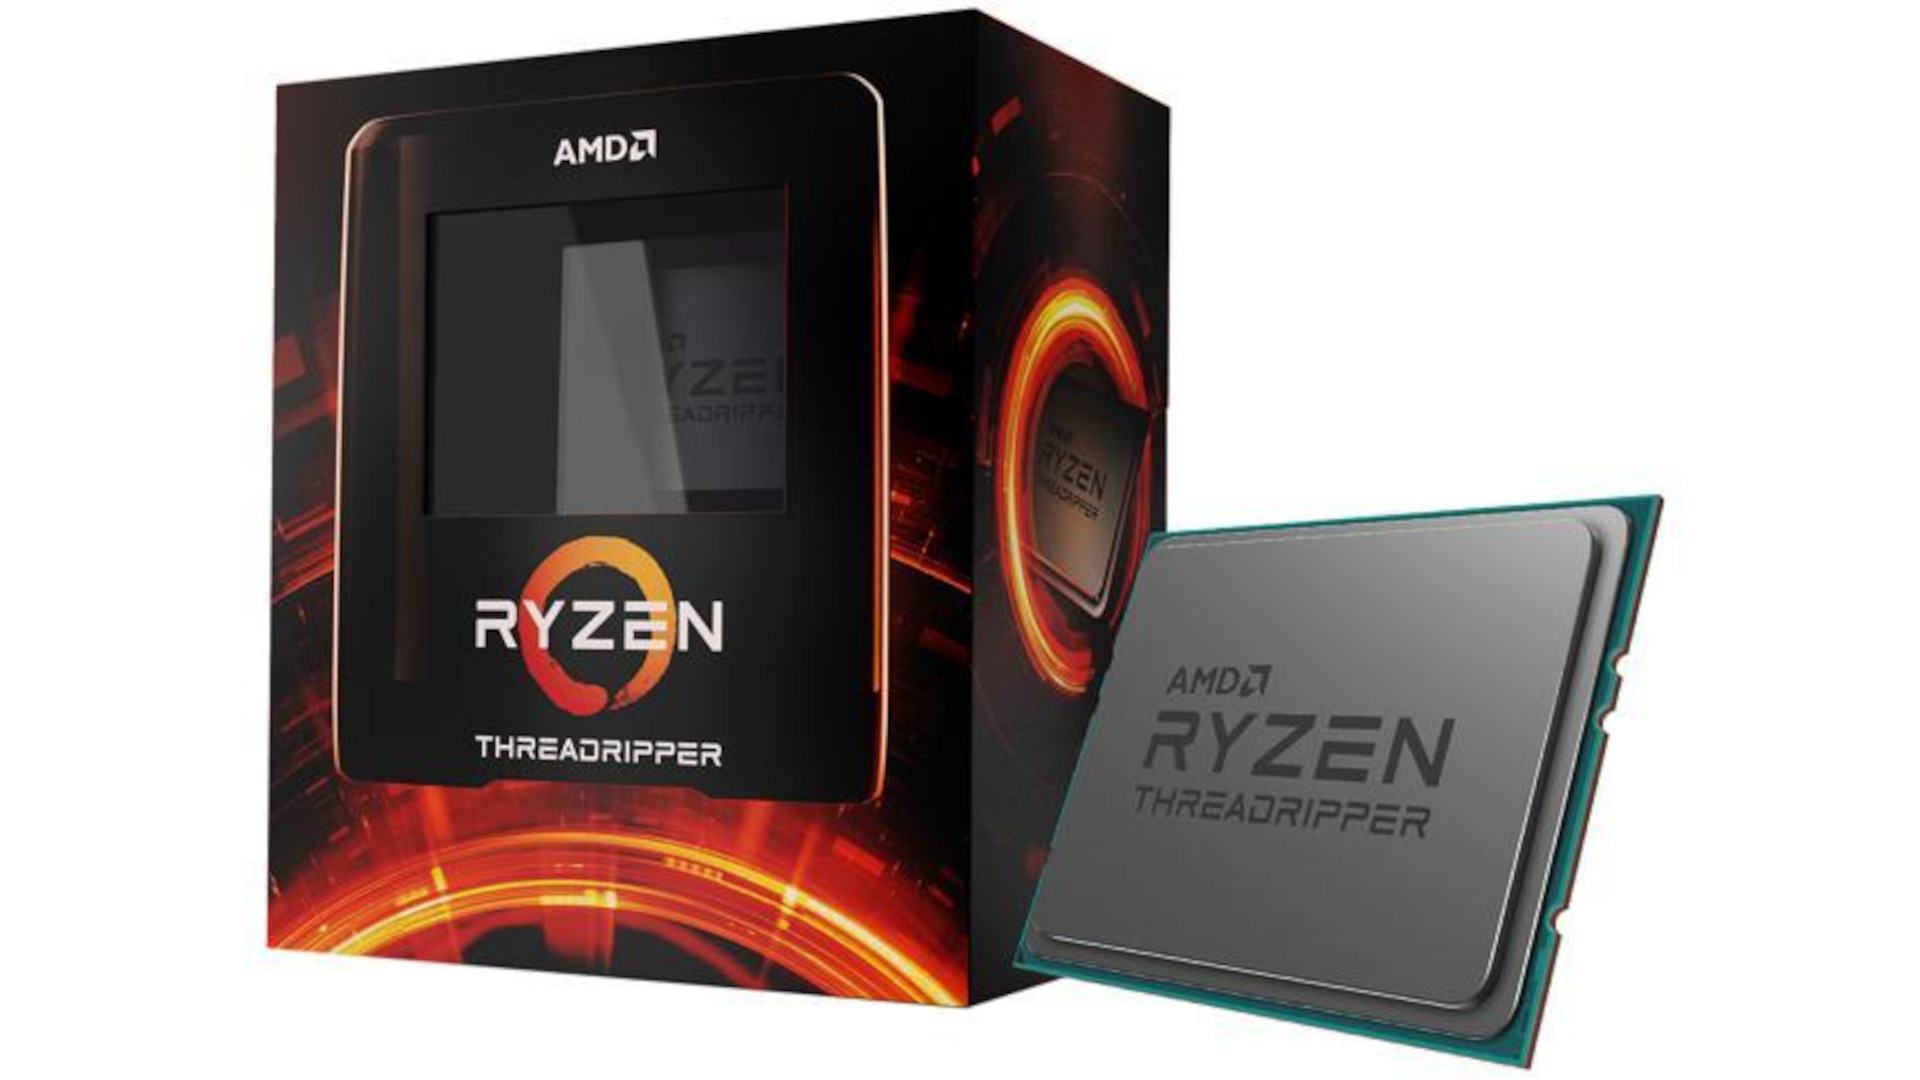 AMD Ryzen TR 3970X 4